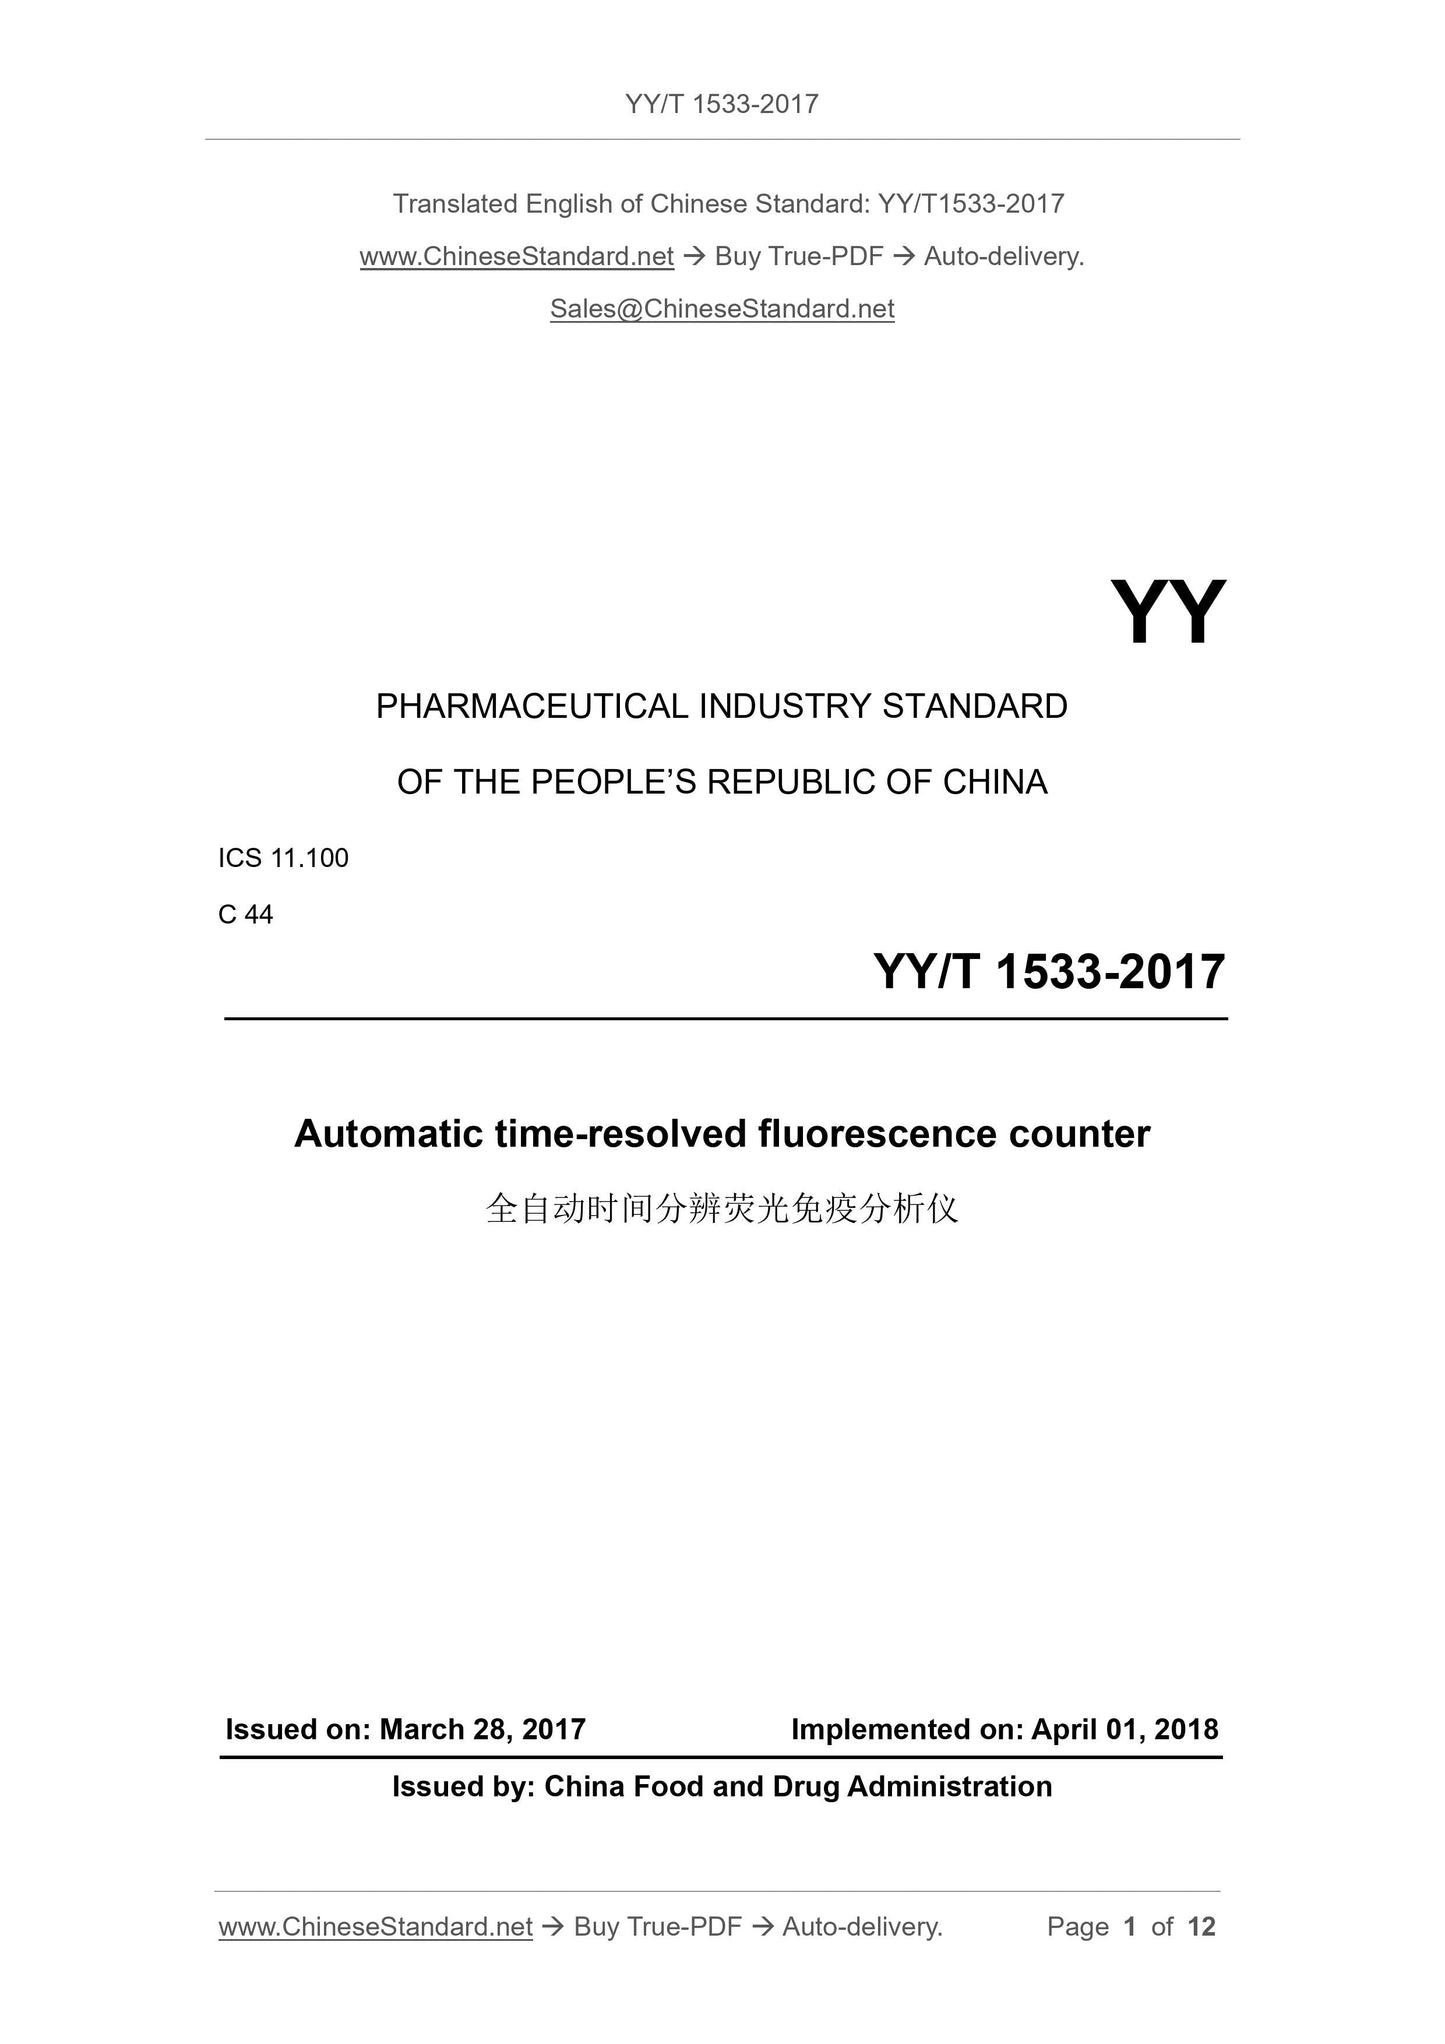 YY/T 1533-2017 Page 1